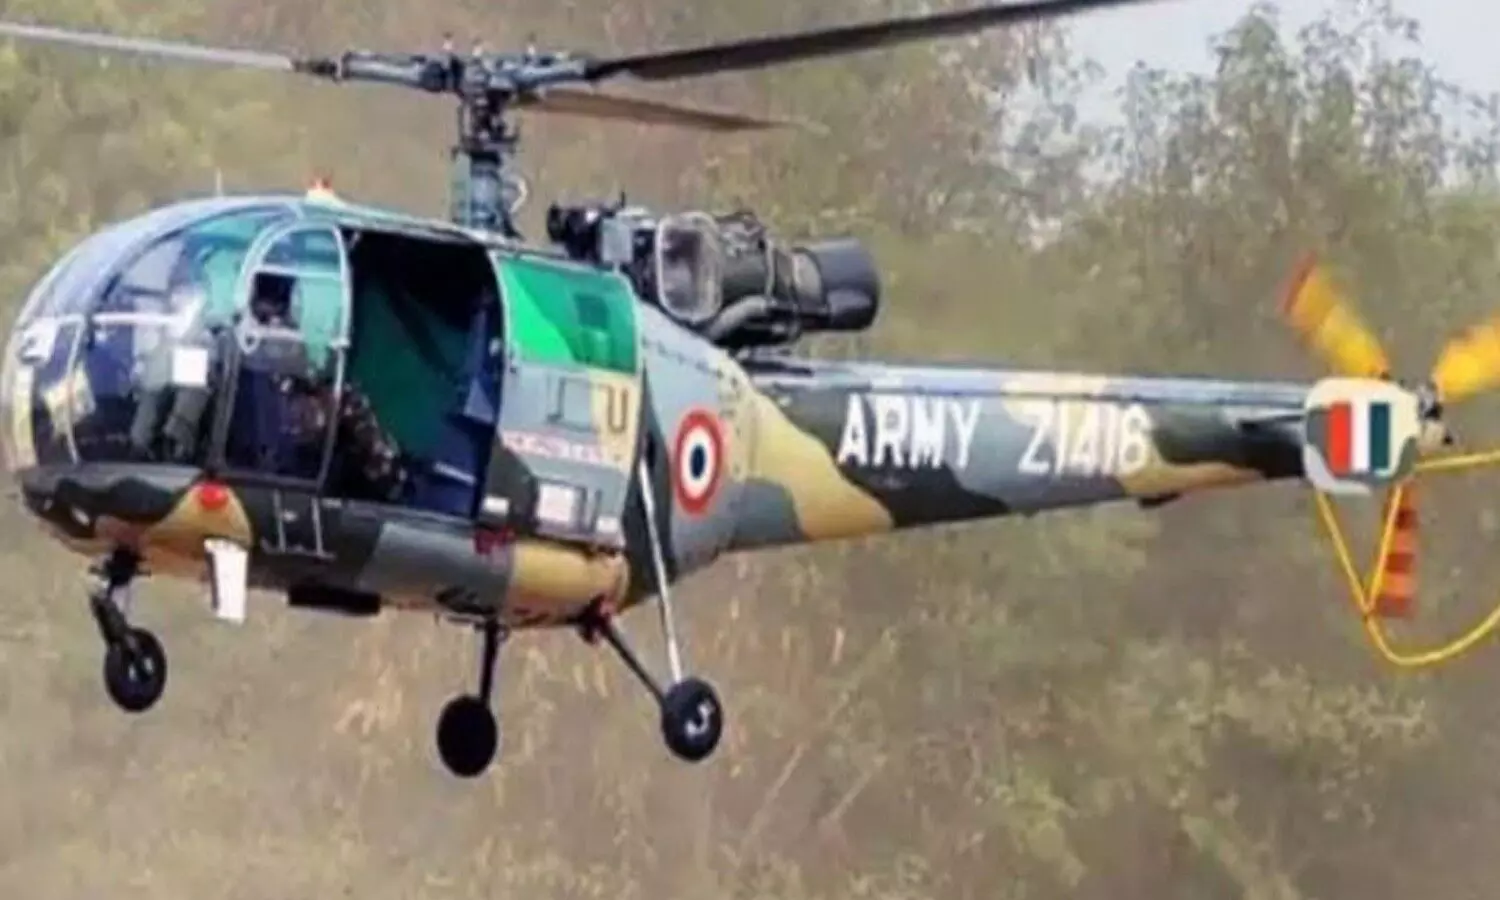 Army Cheetah Helicopter Crashes in Arunachal Pradesh